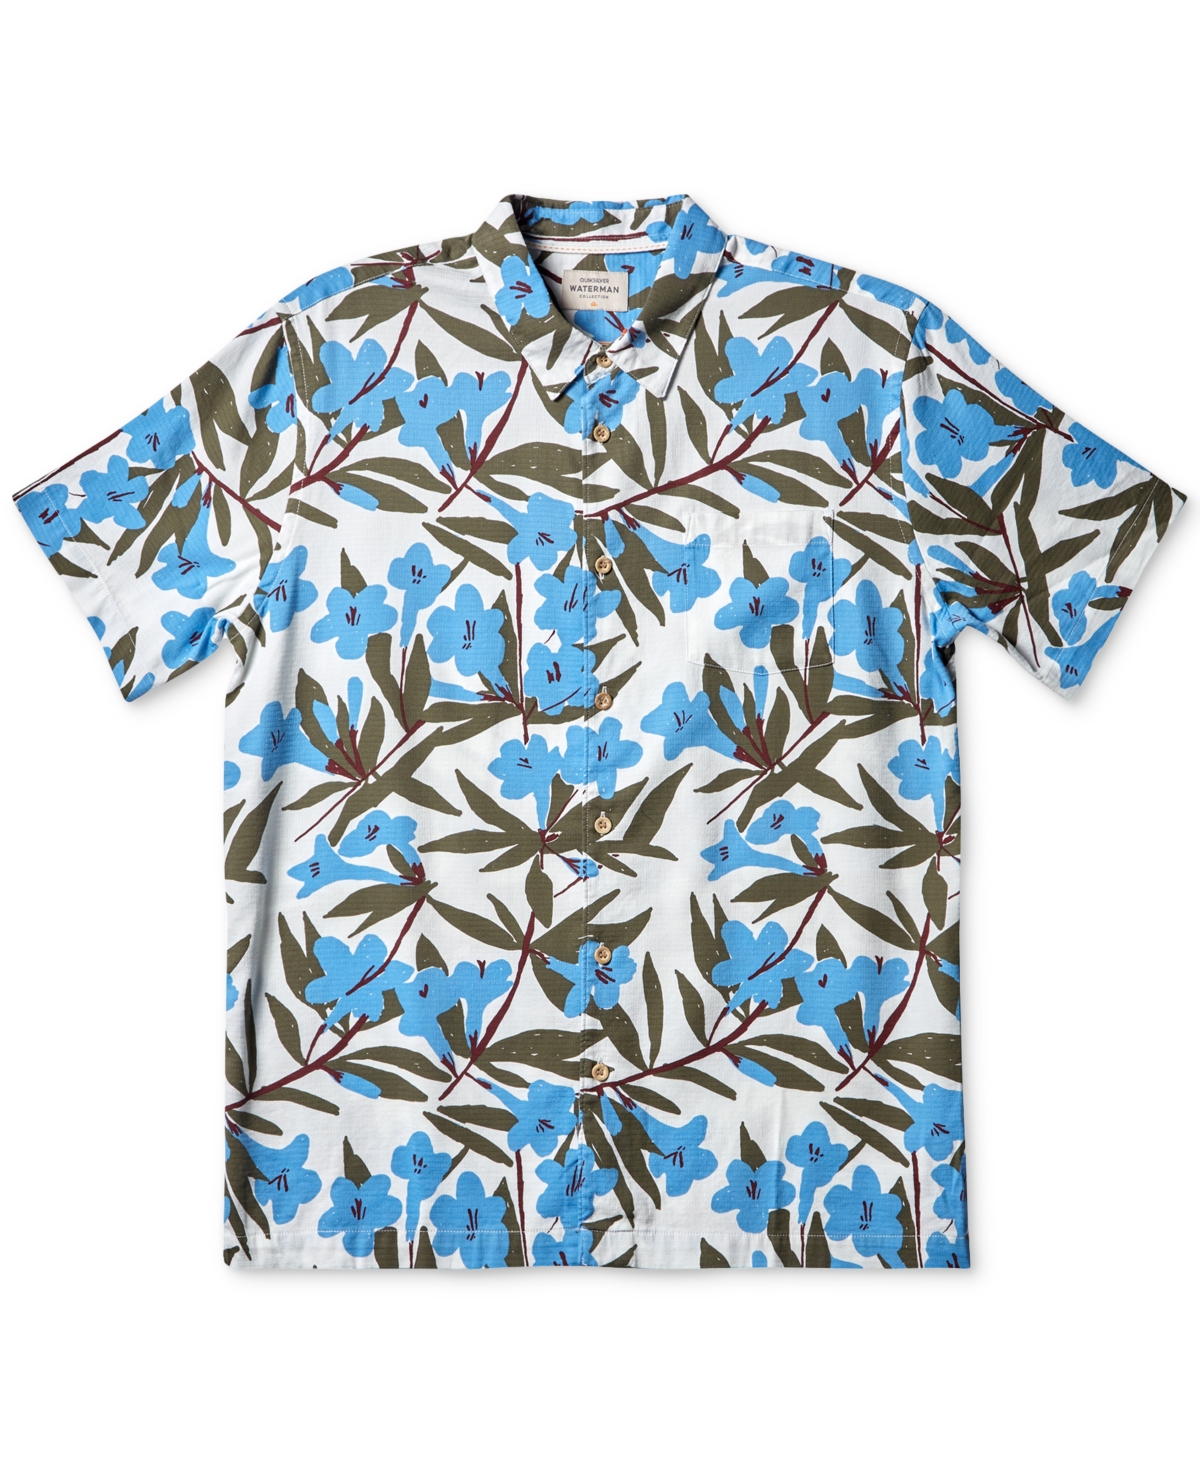 Men's Tropical-Print Shirt - Dusk Blue Around Town